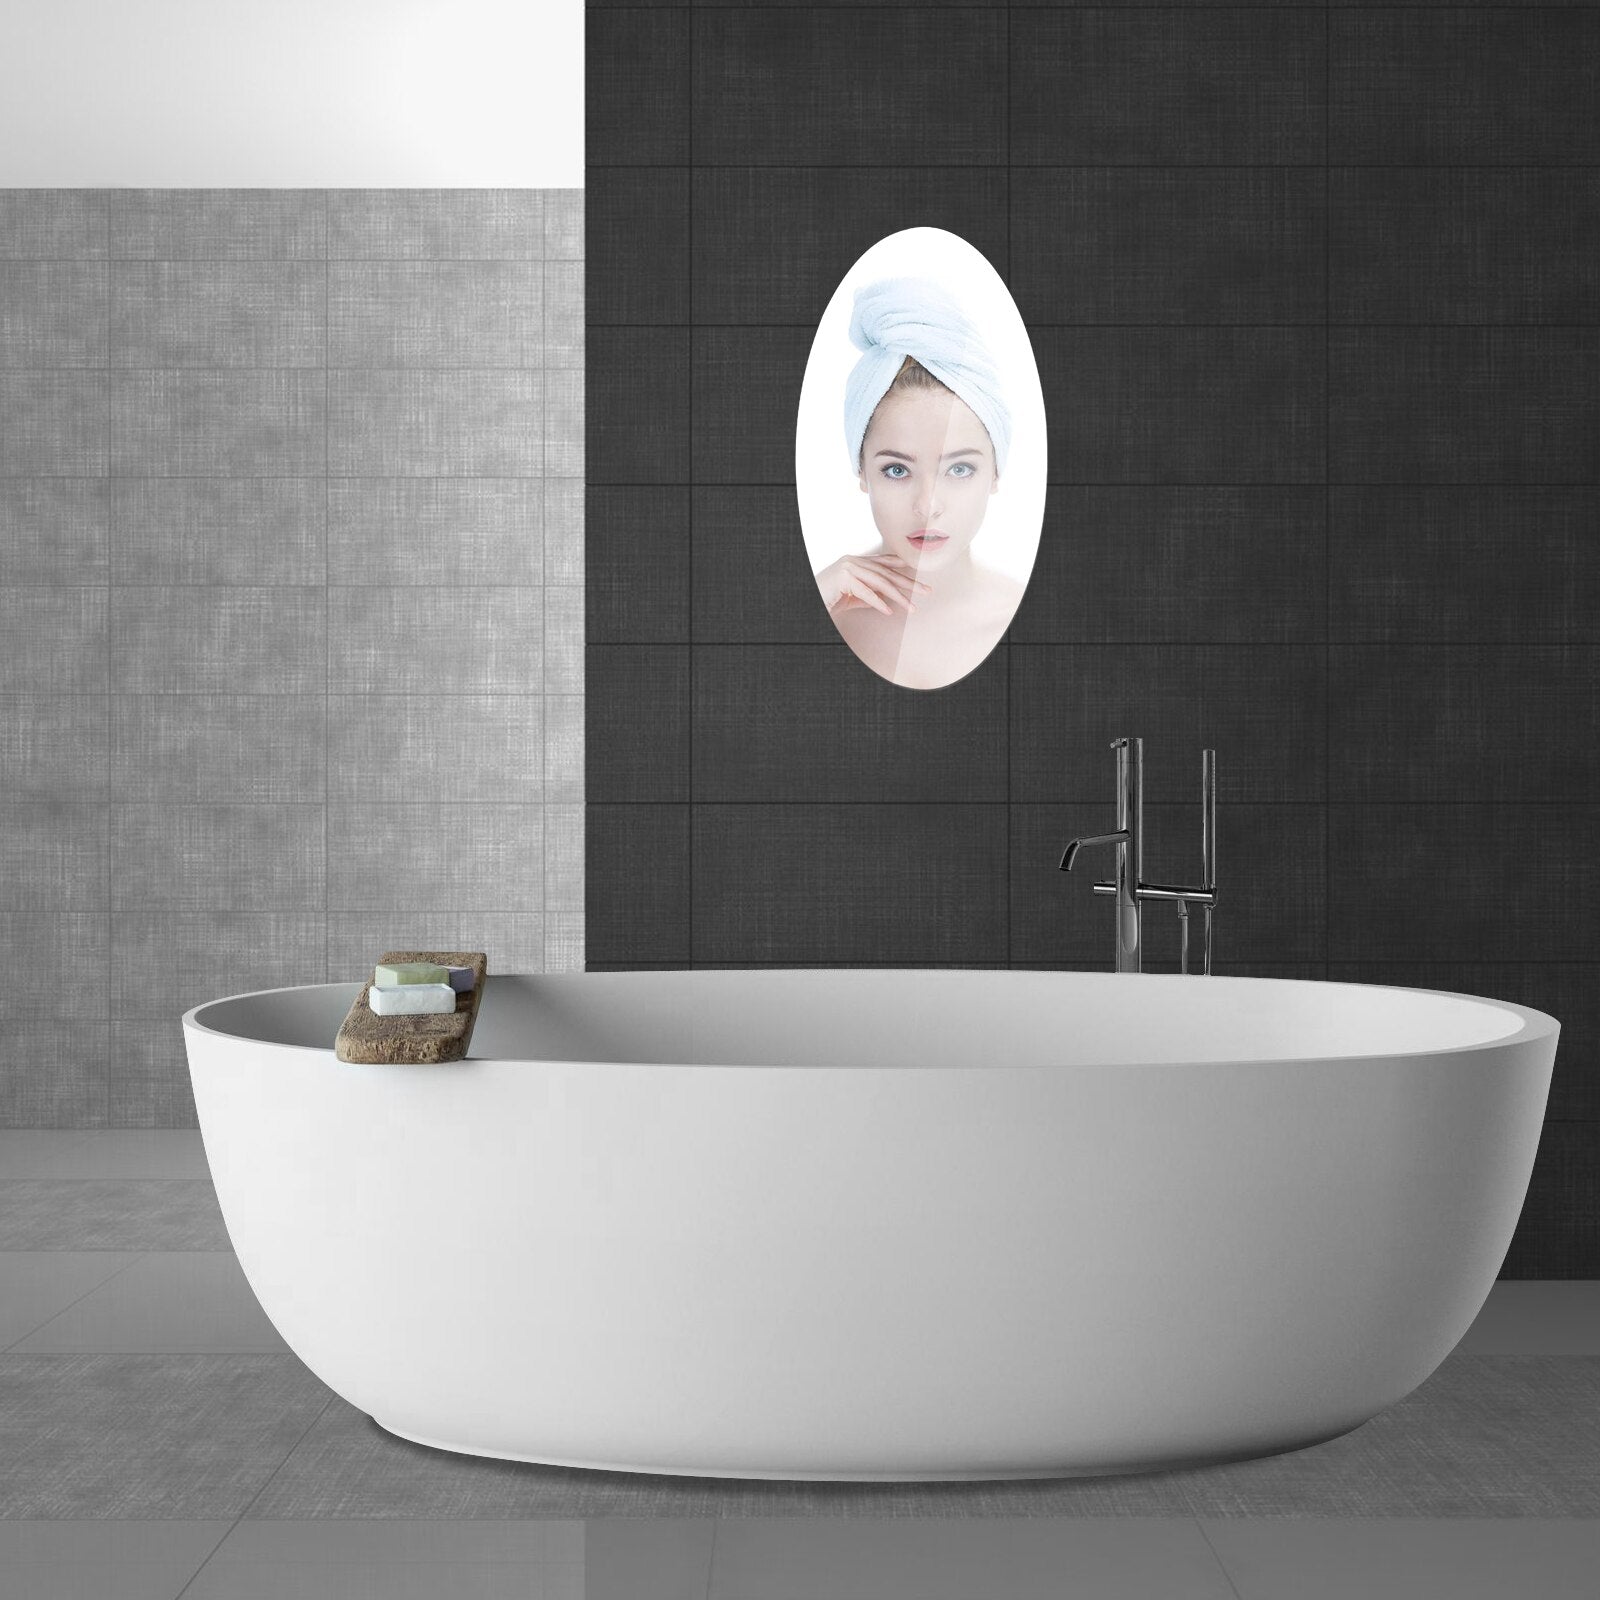 2 Pcs Wall Sticker Modern Wall Mirror Oval Mirror Lens DIY Wall Mirror Plastic Bathroom Mirror Frameless Mirror Ja Inovei